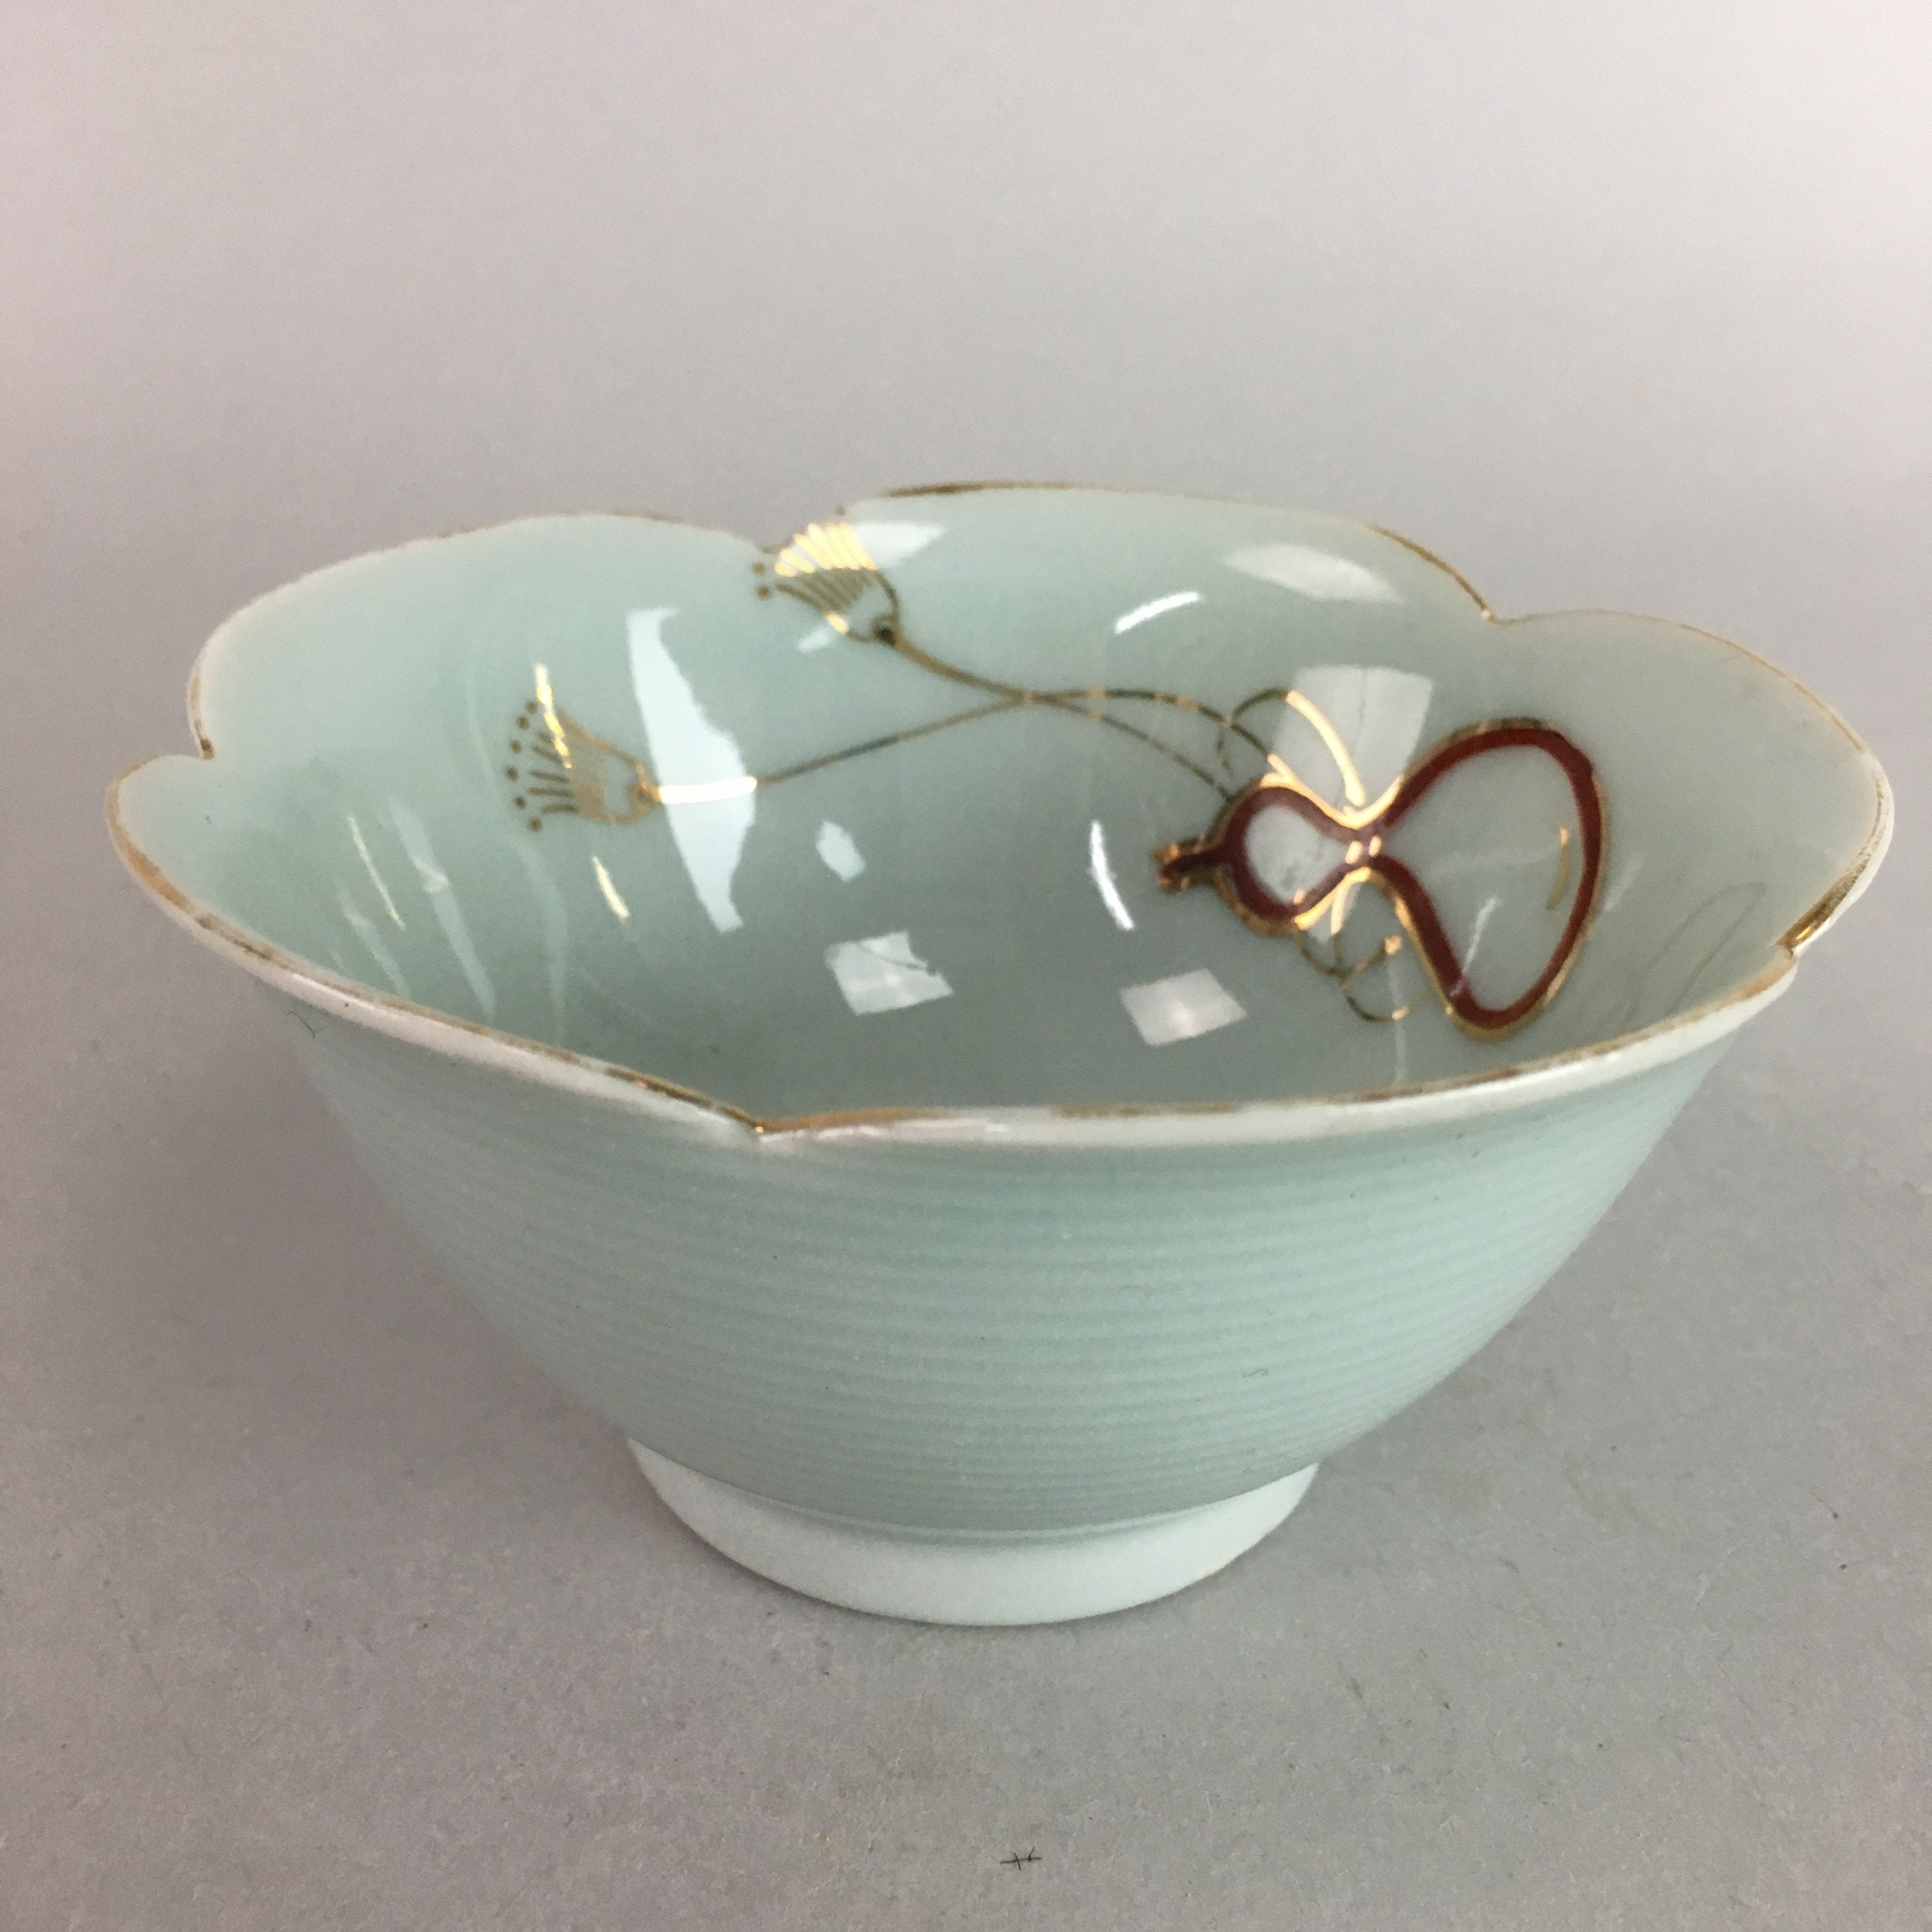 Japanese Celadon Small Bowl Vtg Porcelain Green Kobachi Gourd Chess Floral PT677